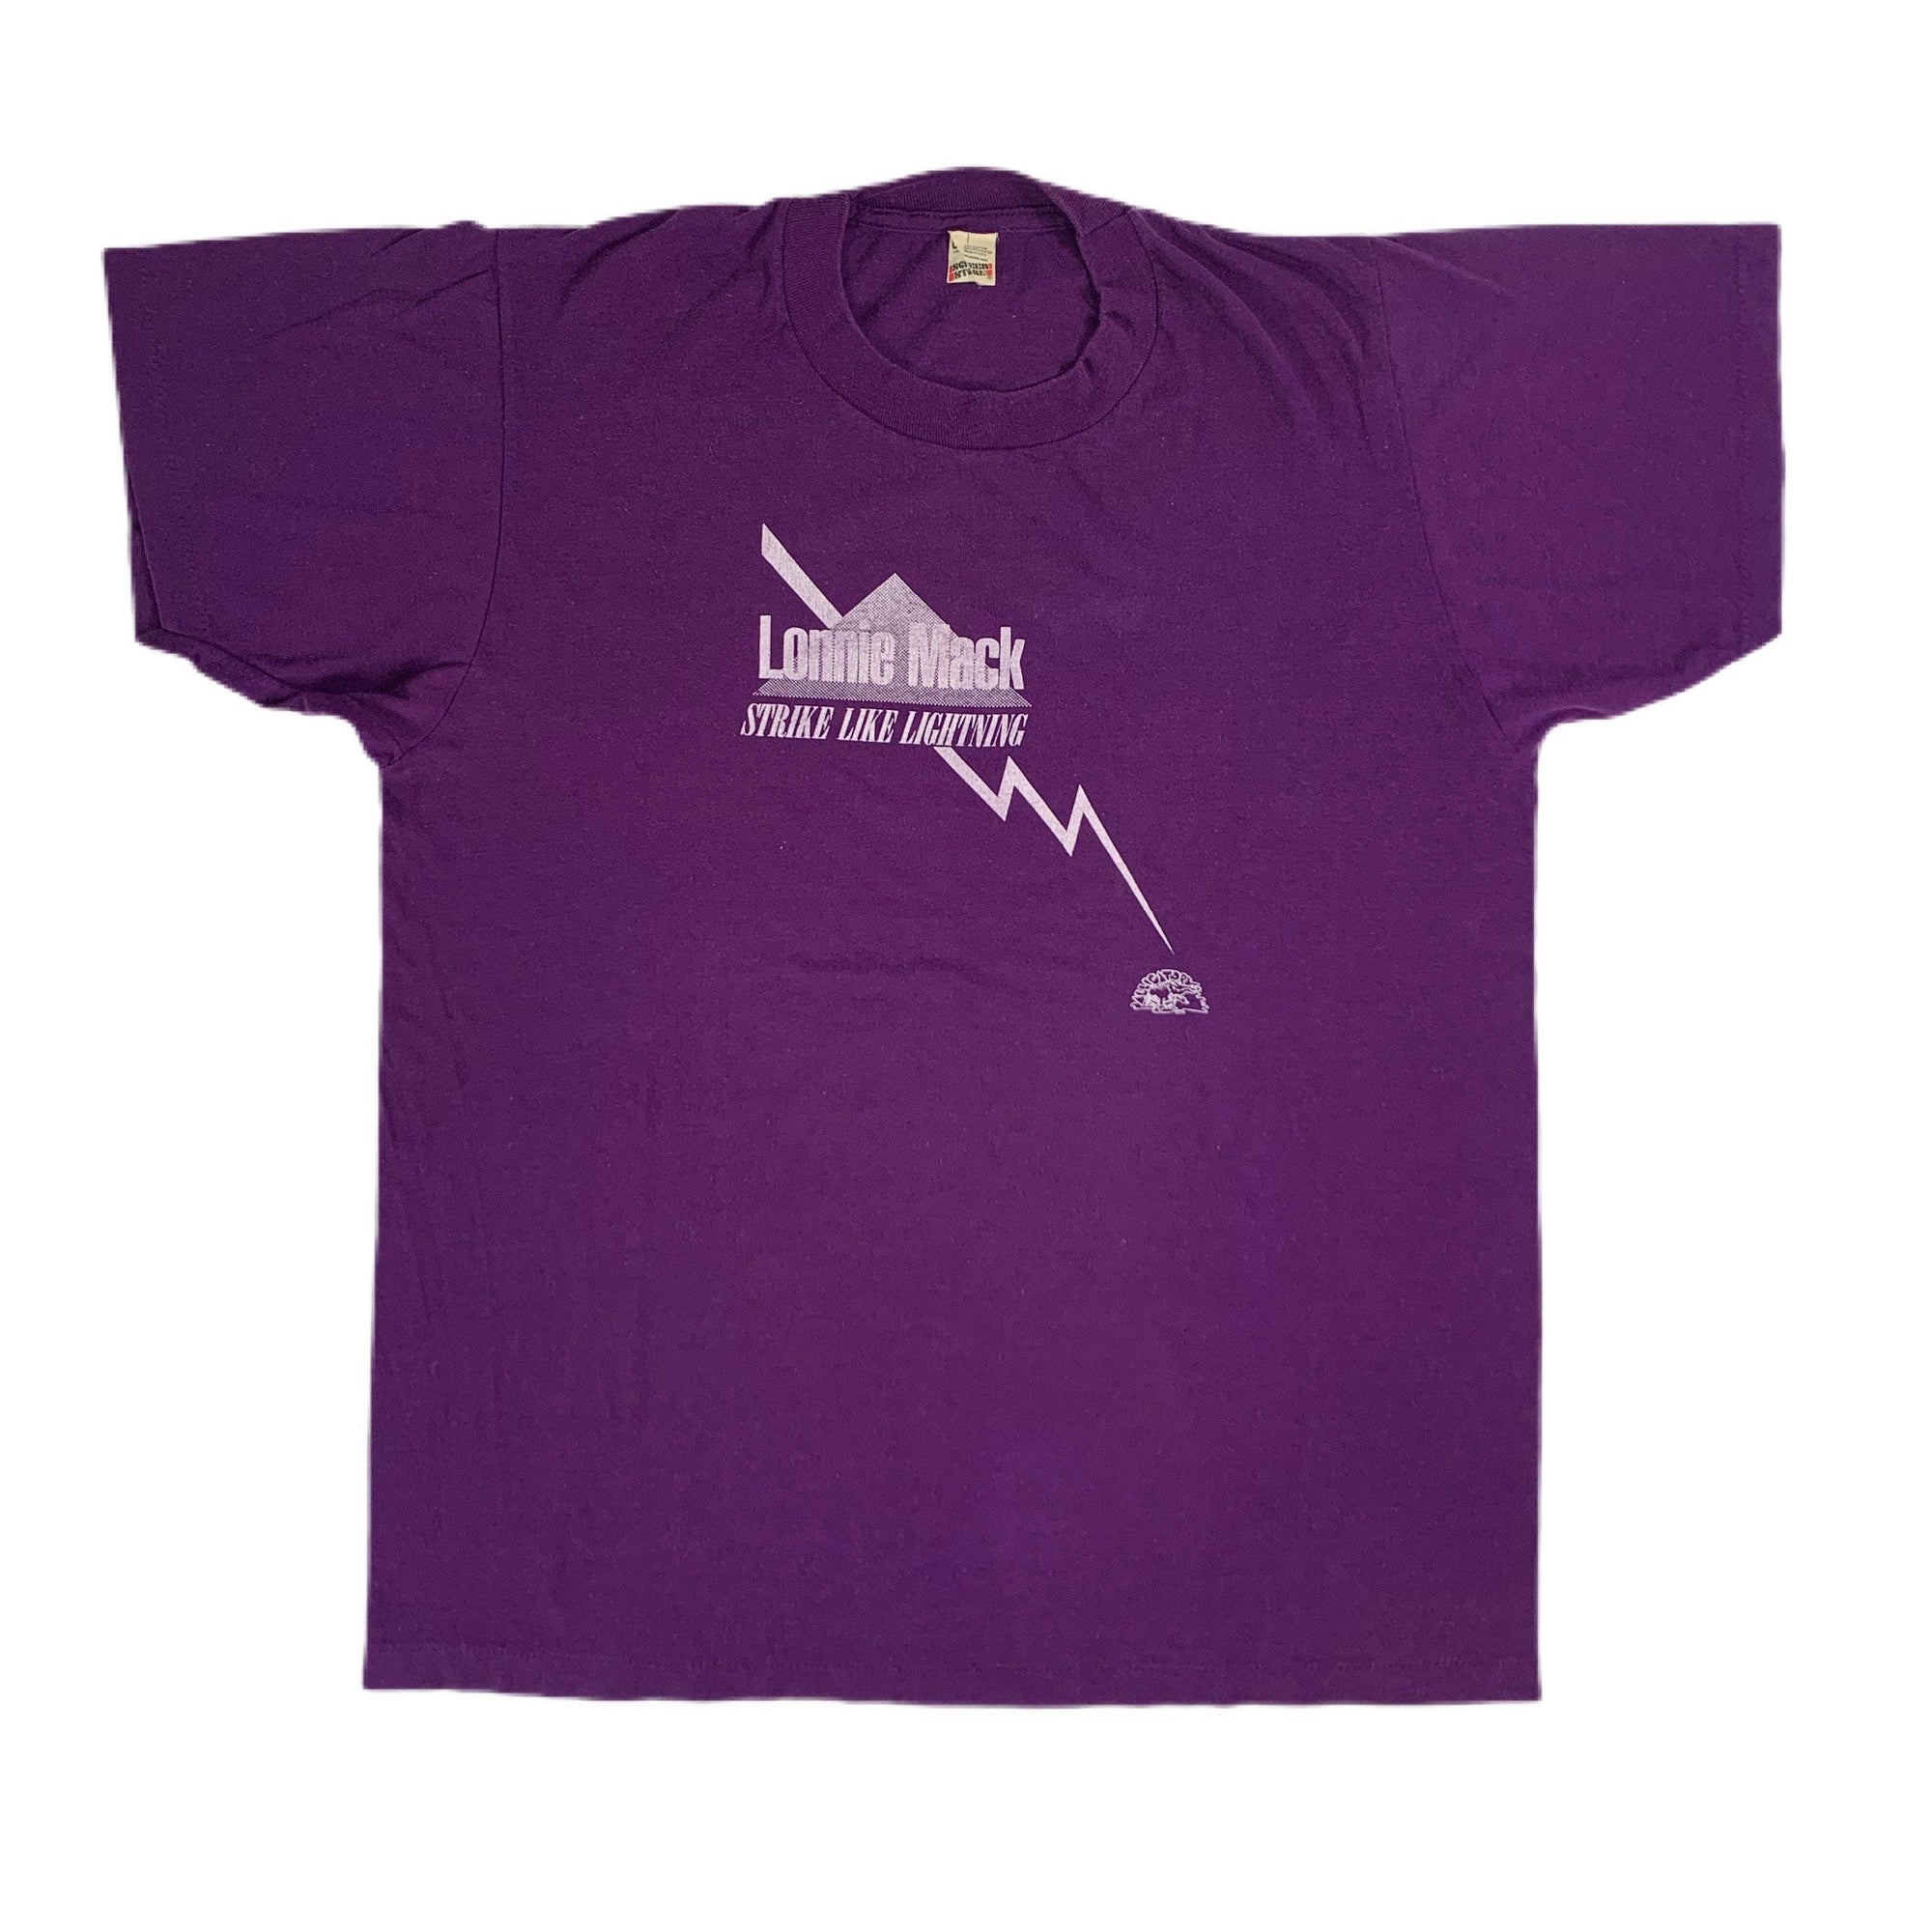 Vintage Lonnie Mack "Strike Like Lightning" T-Shirt - jointcustodydc